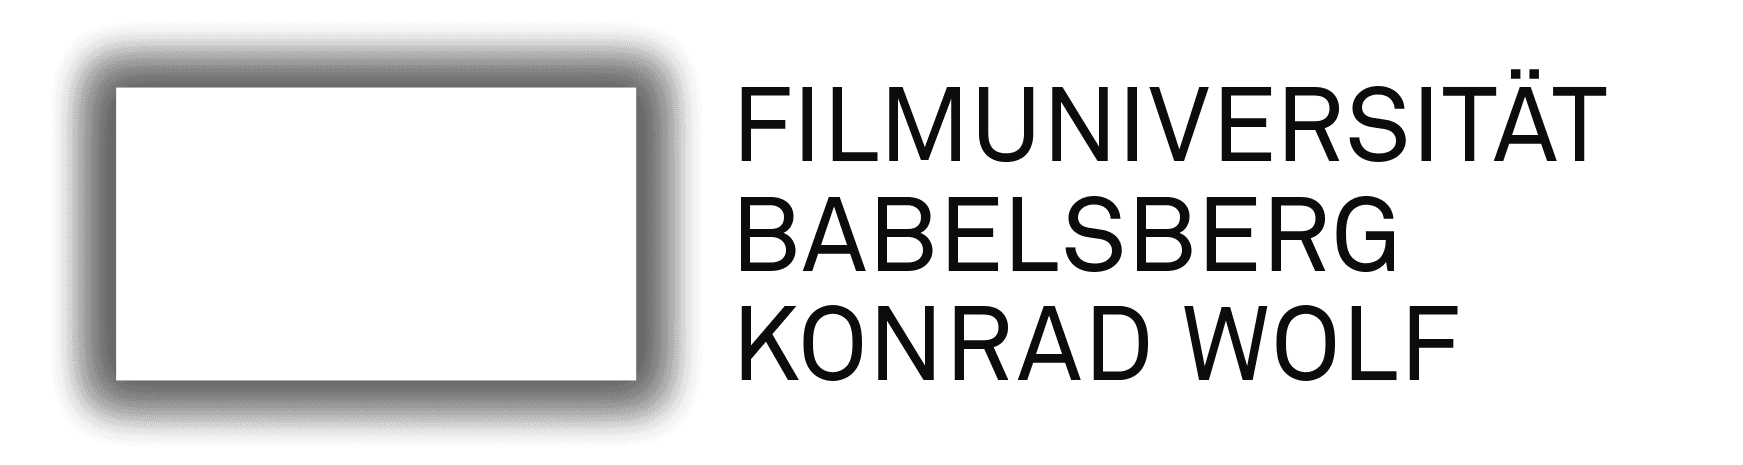 film-university-babelsberg-konrad-wolf-65dd701ab3-cover-picture